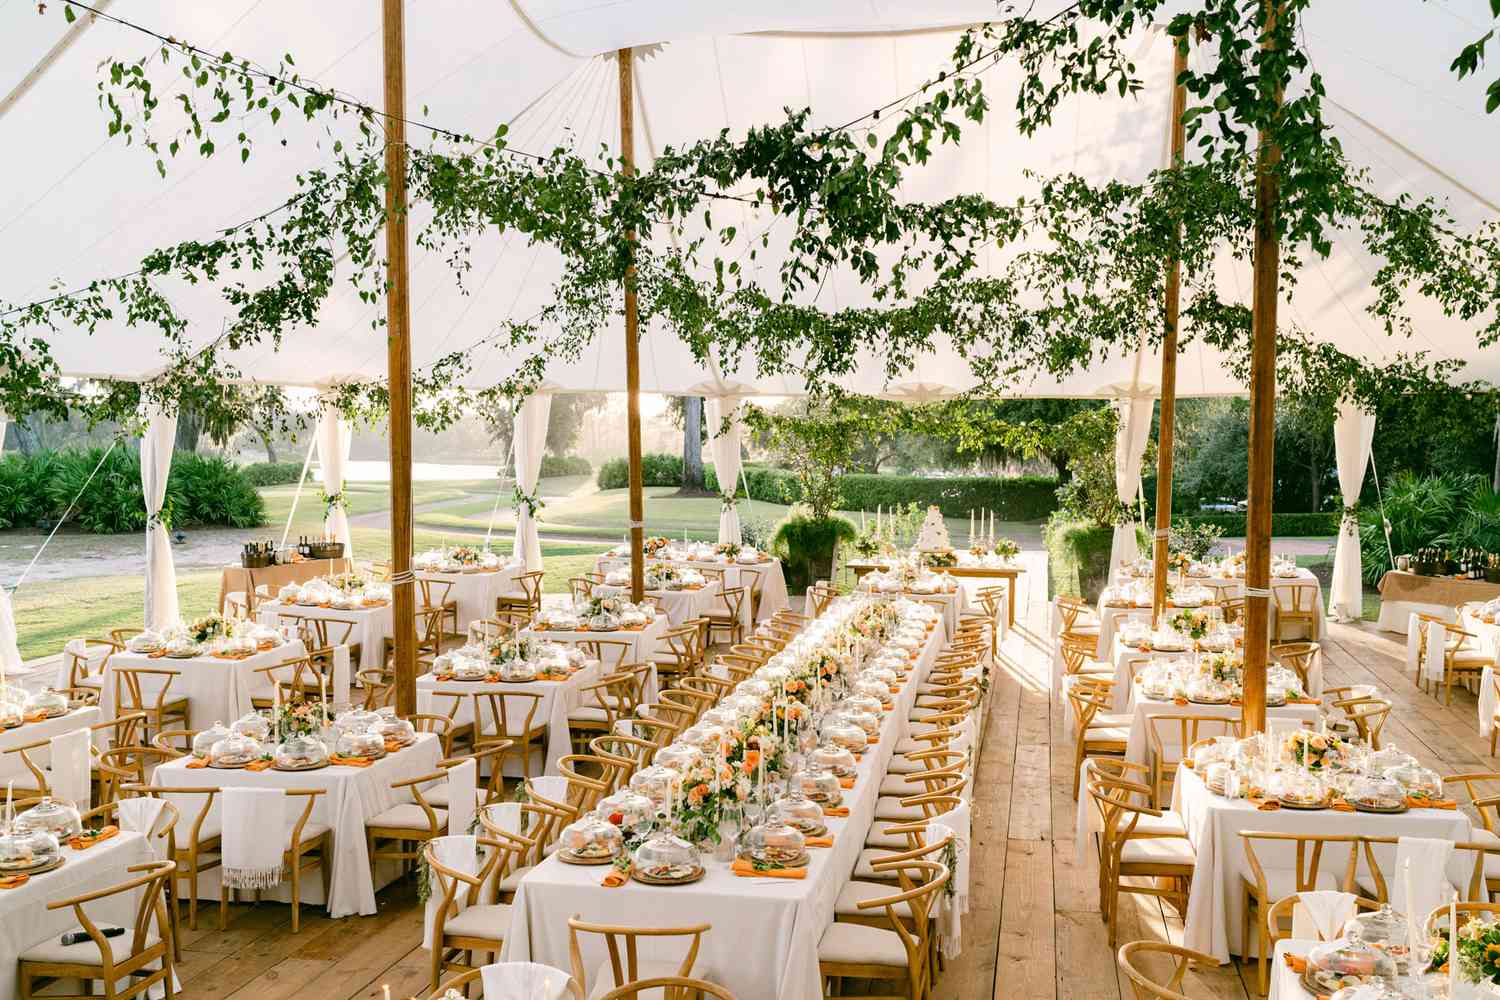 elegant tent wedding reception with orange and wooden decor